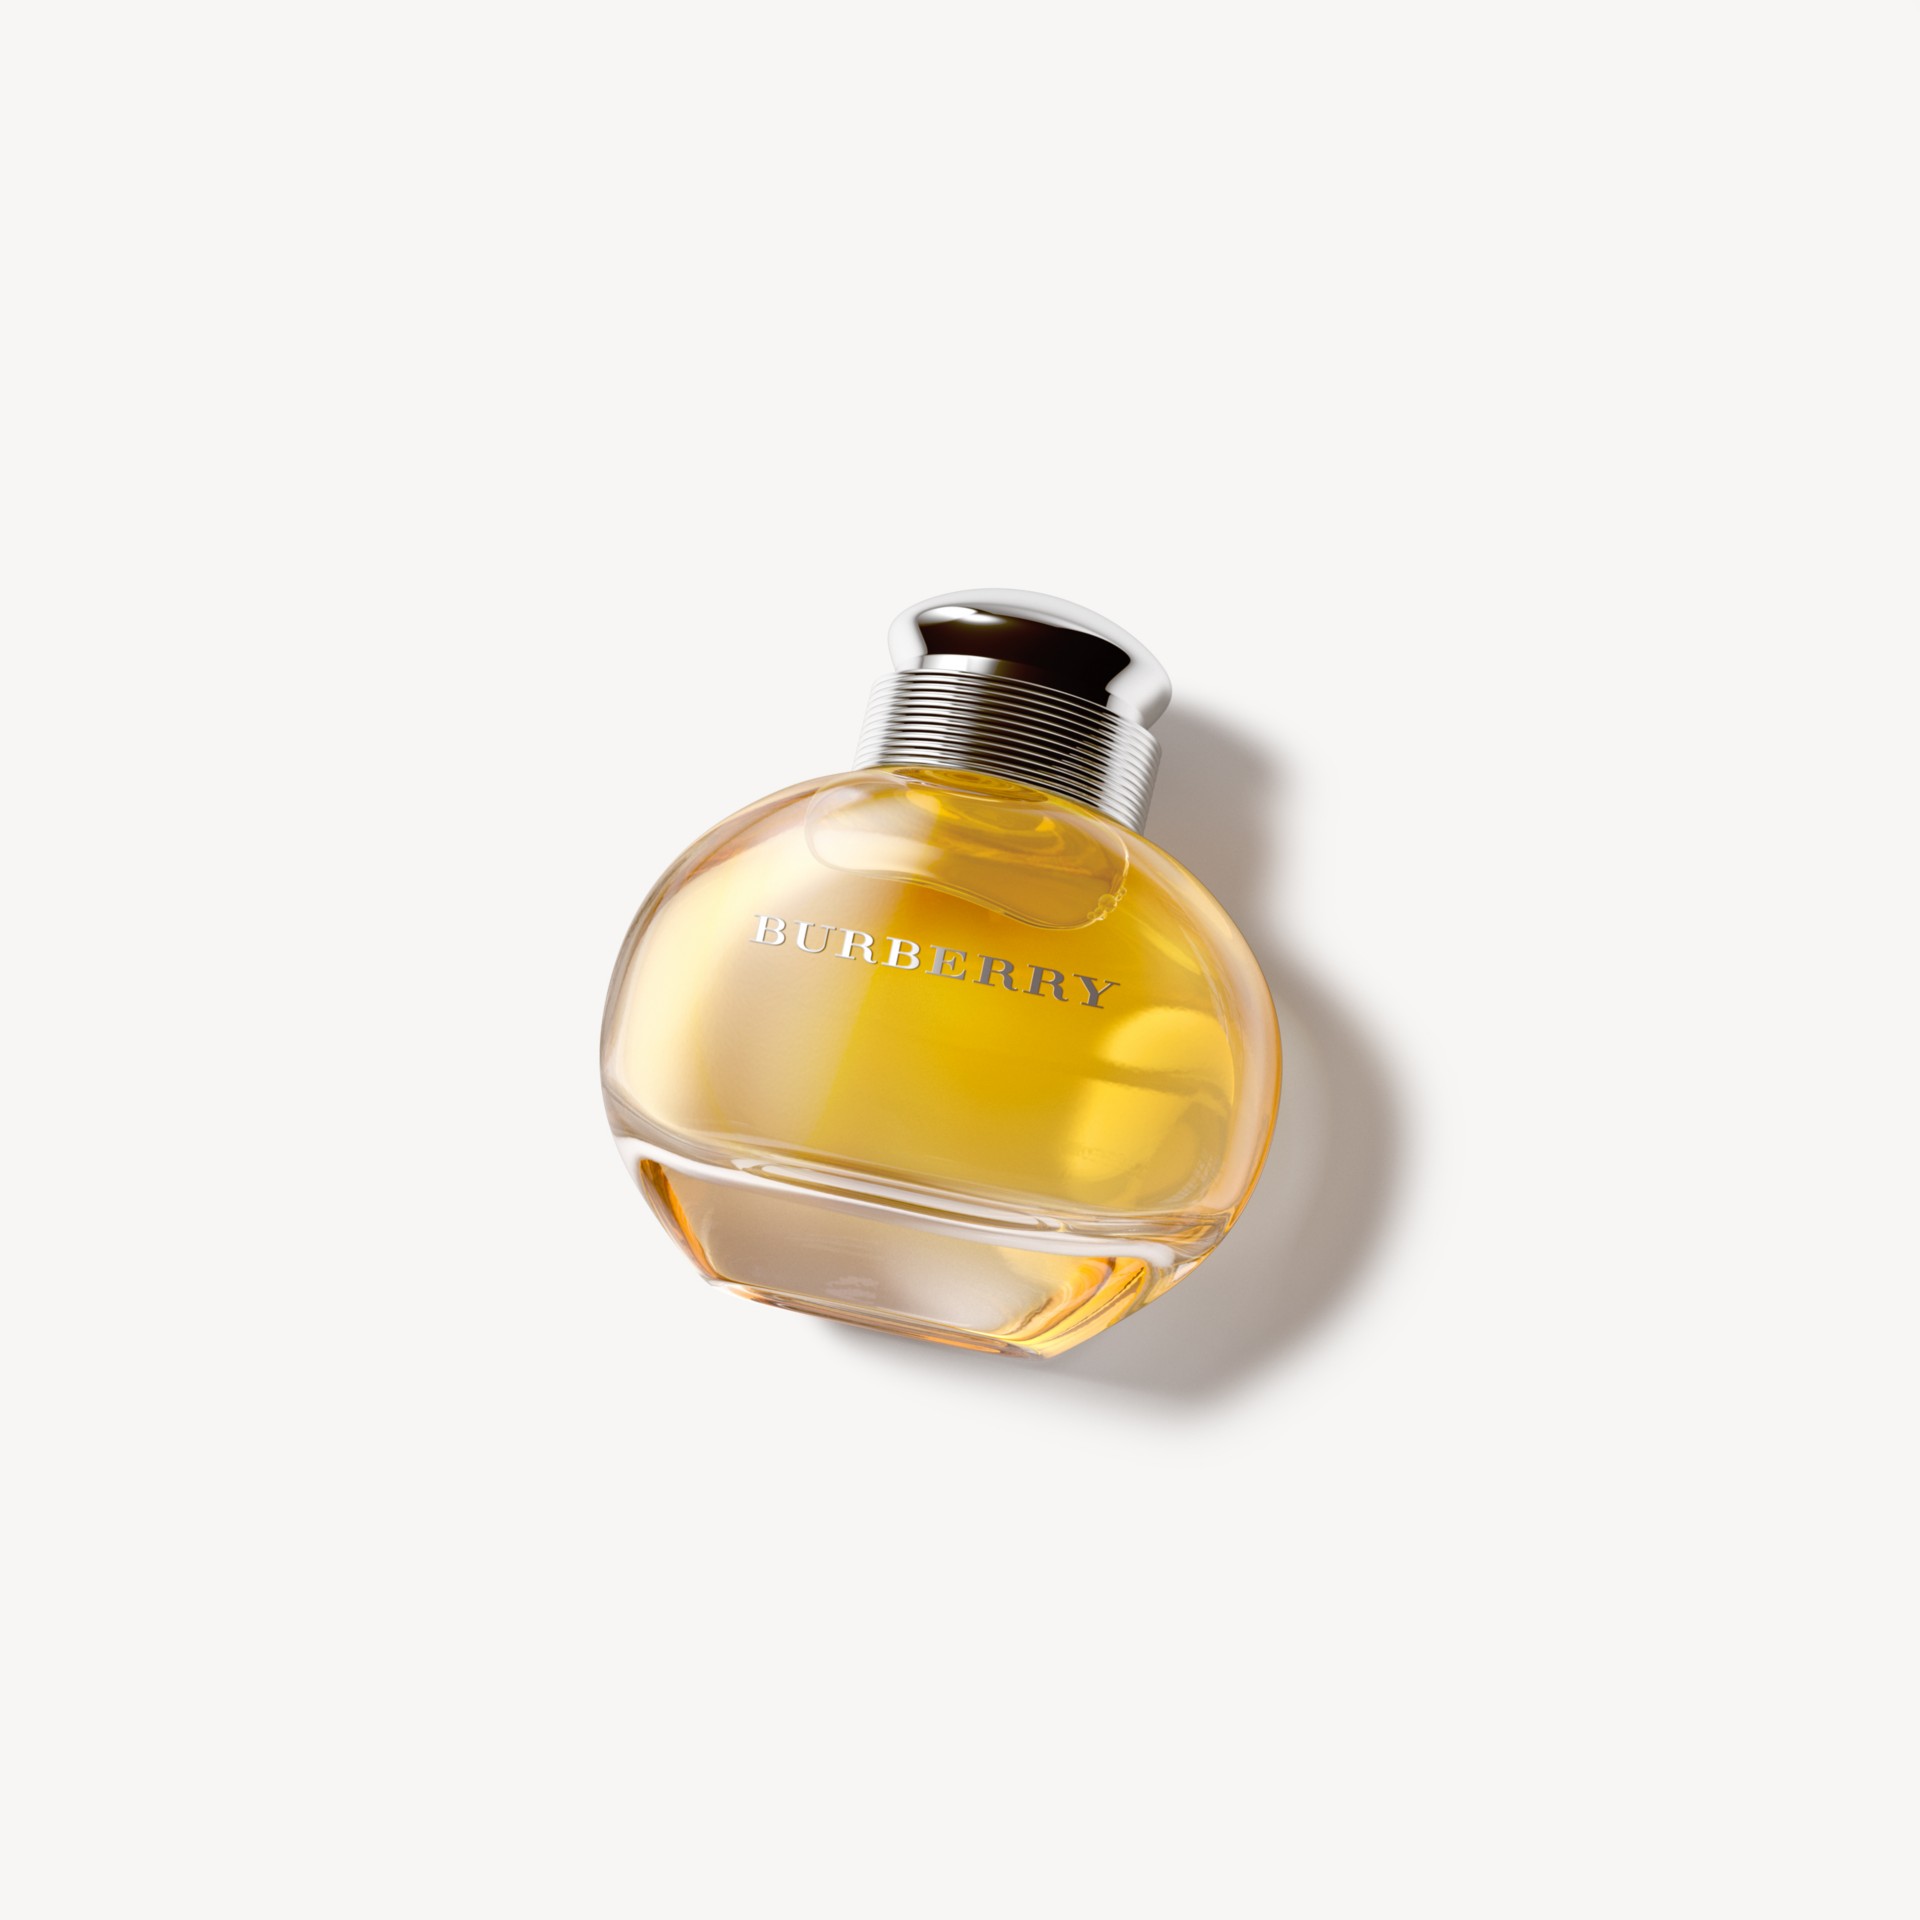 Burberry For Women Eau de Parfum 50ml - Women | Burberry United States